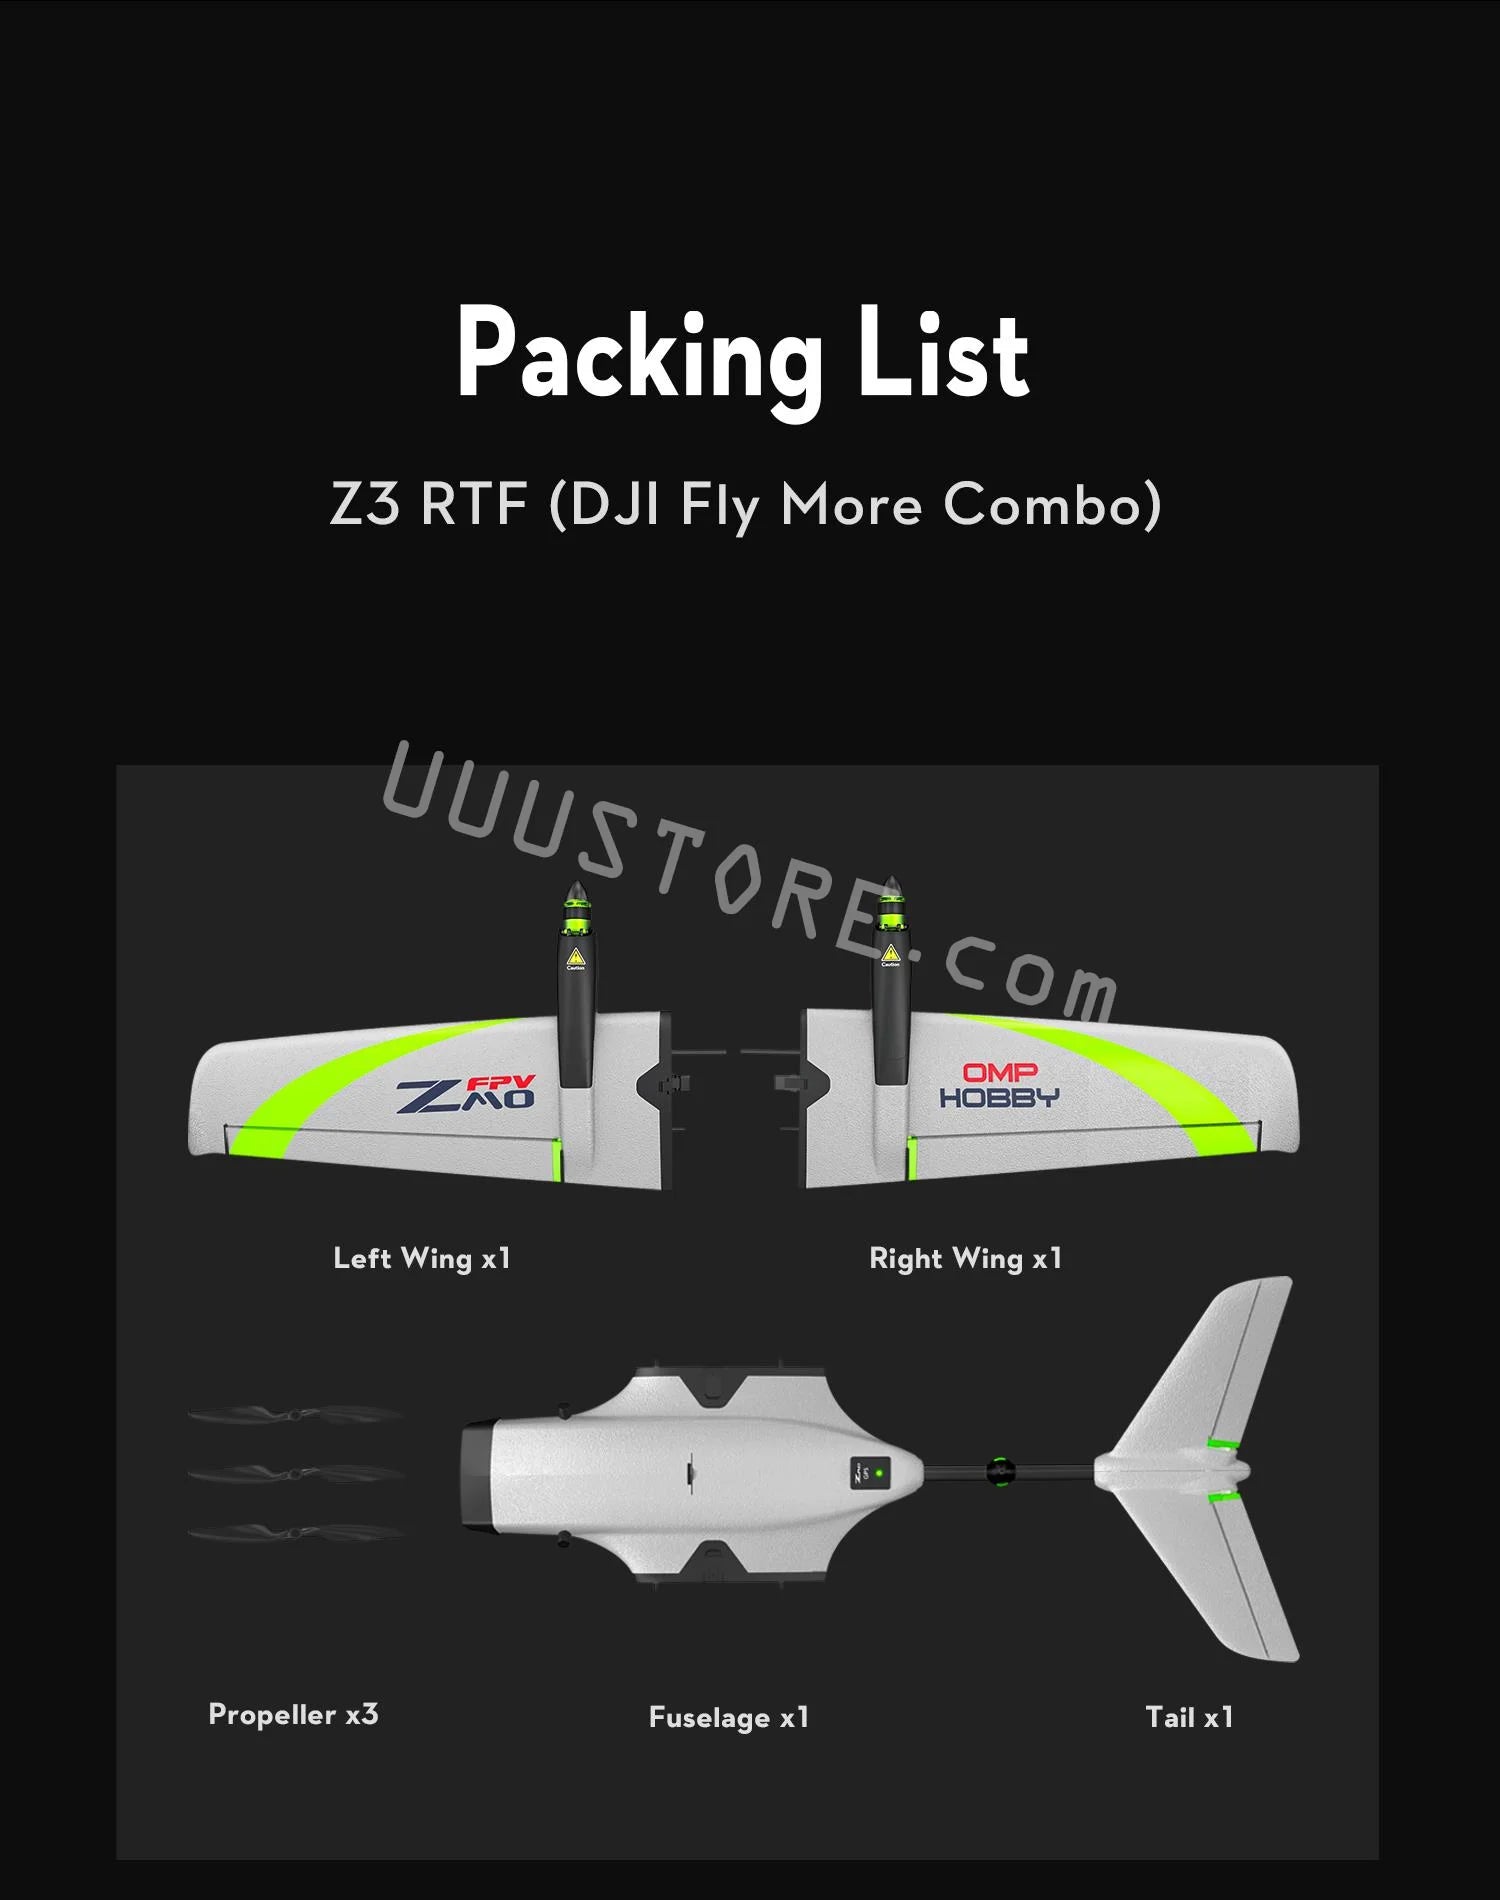 OMPHOBBY ZMO VTOL RC AirPlane , Packing List 23 RTF (DJI More Combo) FZV OMP